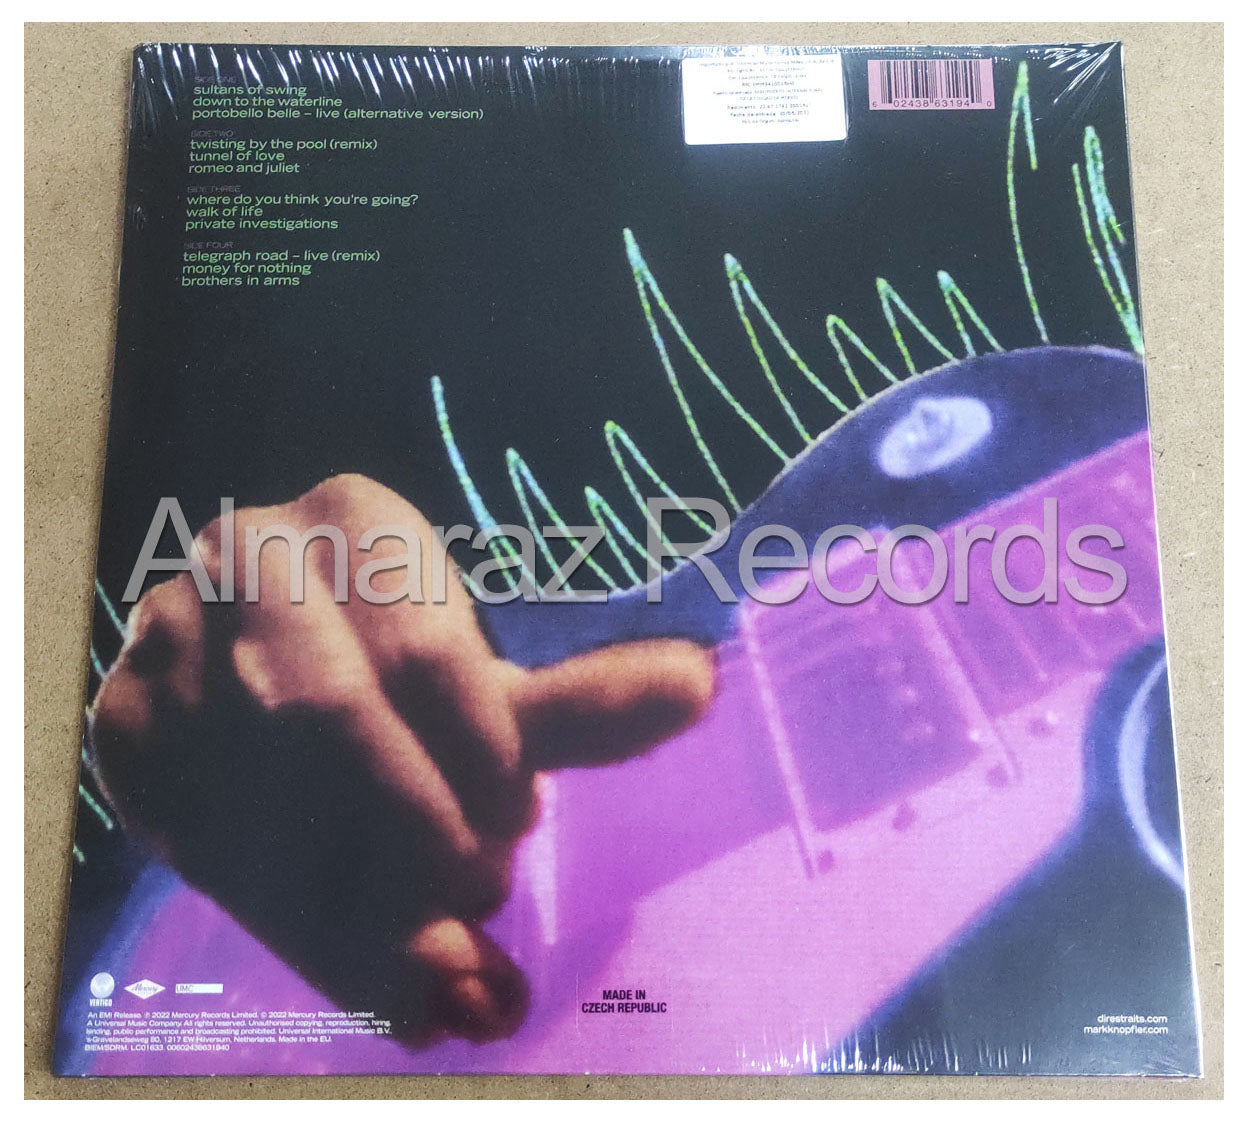 Dire Straits Money For Nothing Vinyl LP [2022]